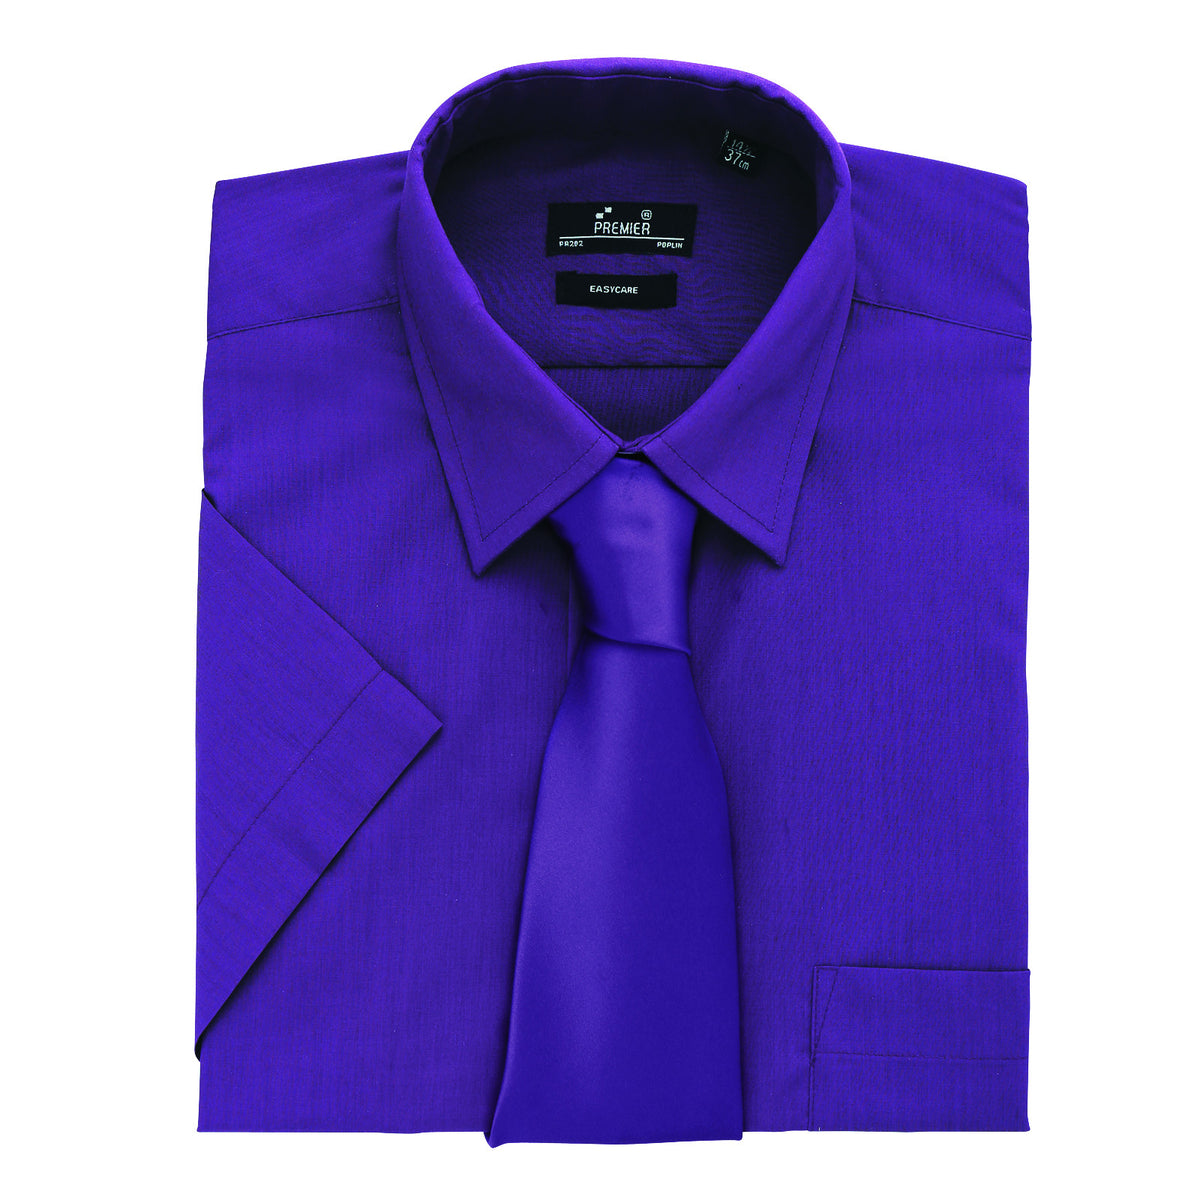 Premier Poplin Shirts (Navy, Lilac, Purple, Violet, Aubergine) - peterdrew.com
 - 5